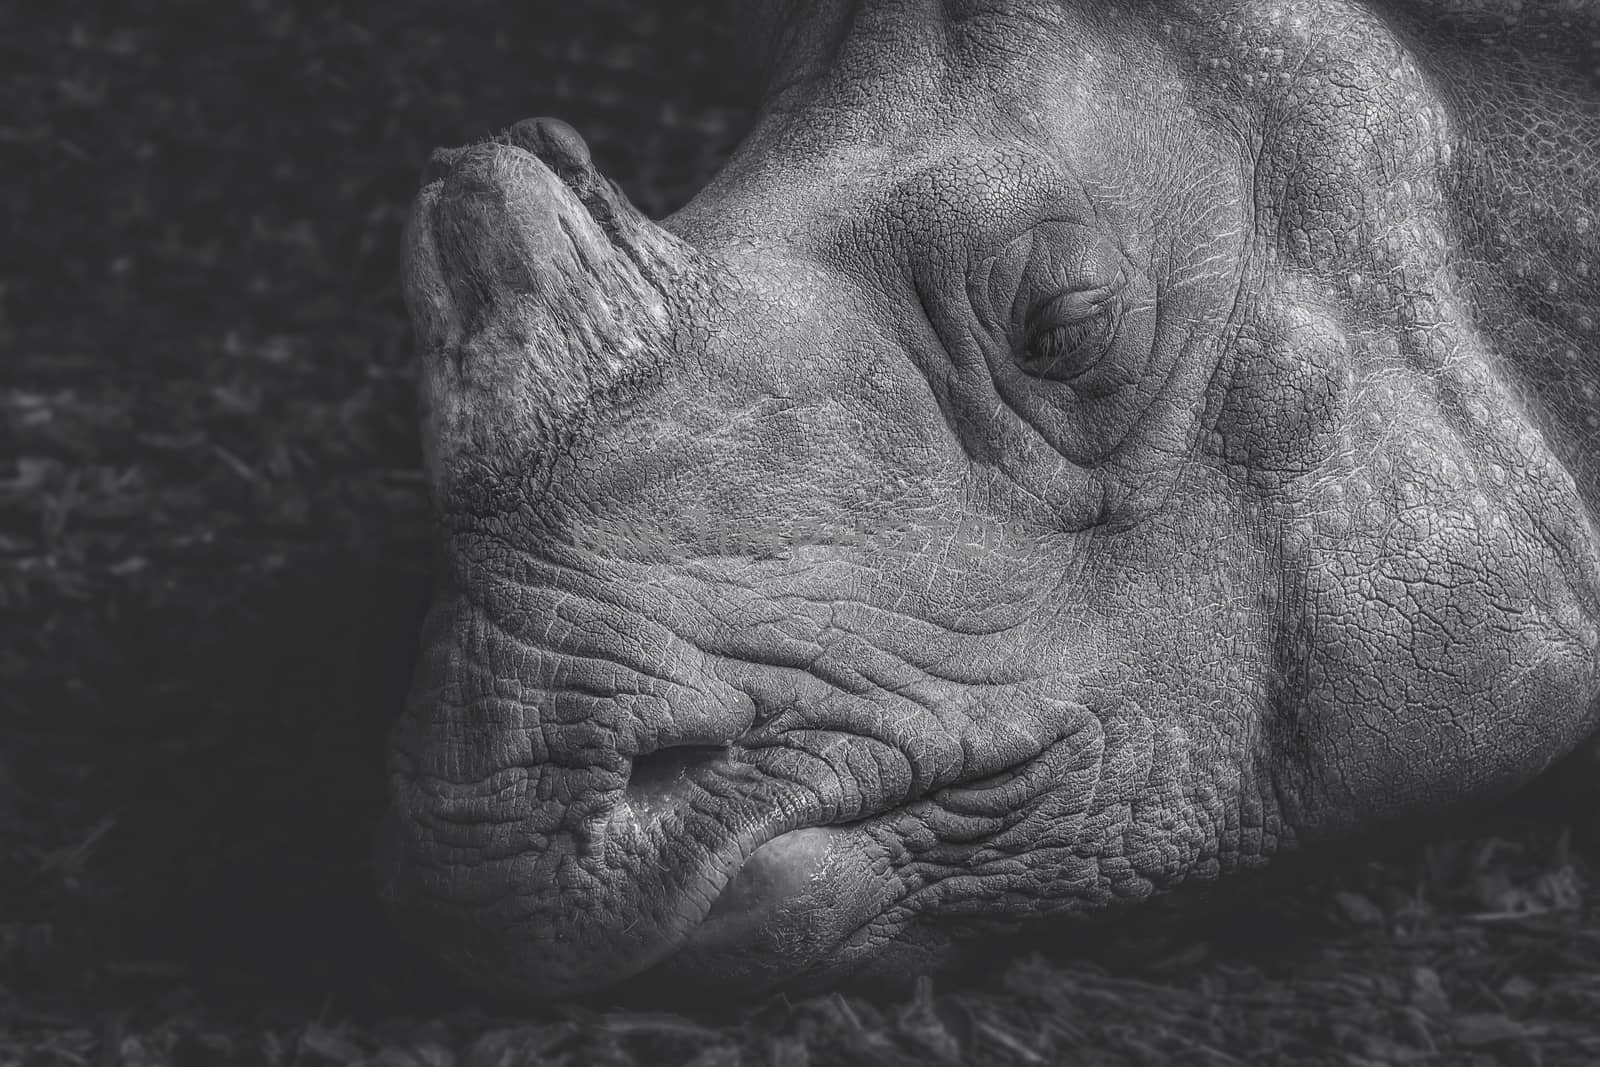 Head shot of a sleeping rhino, grey colored